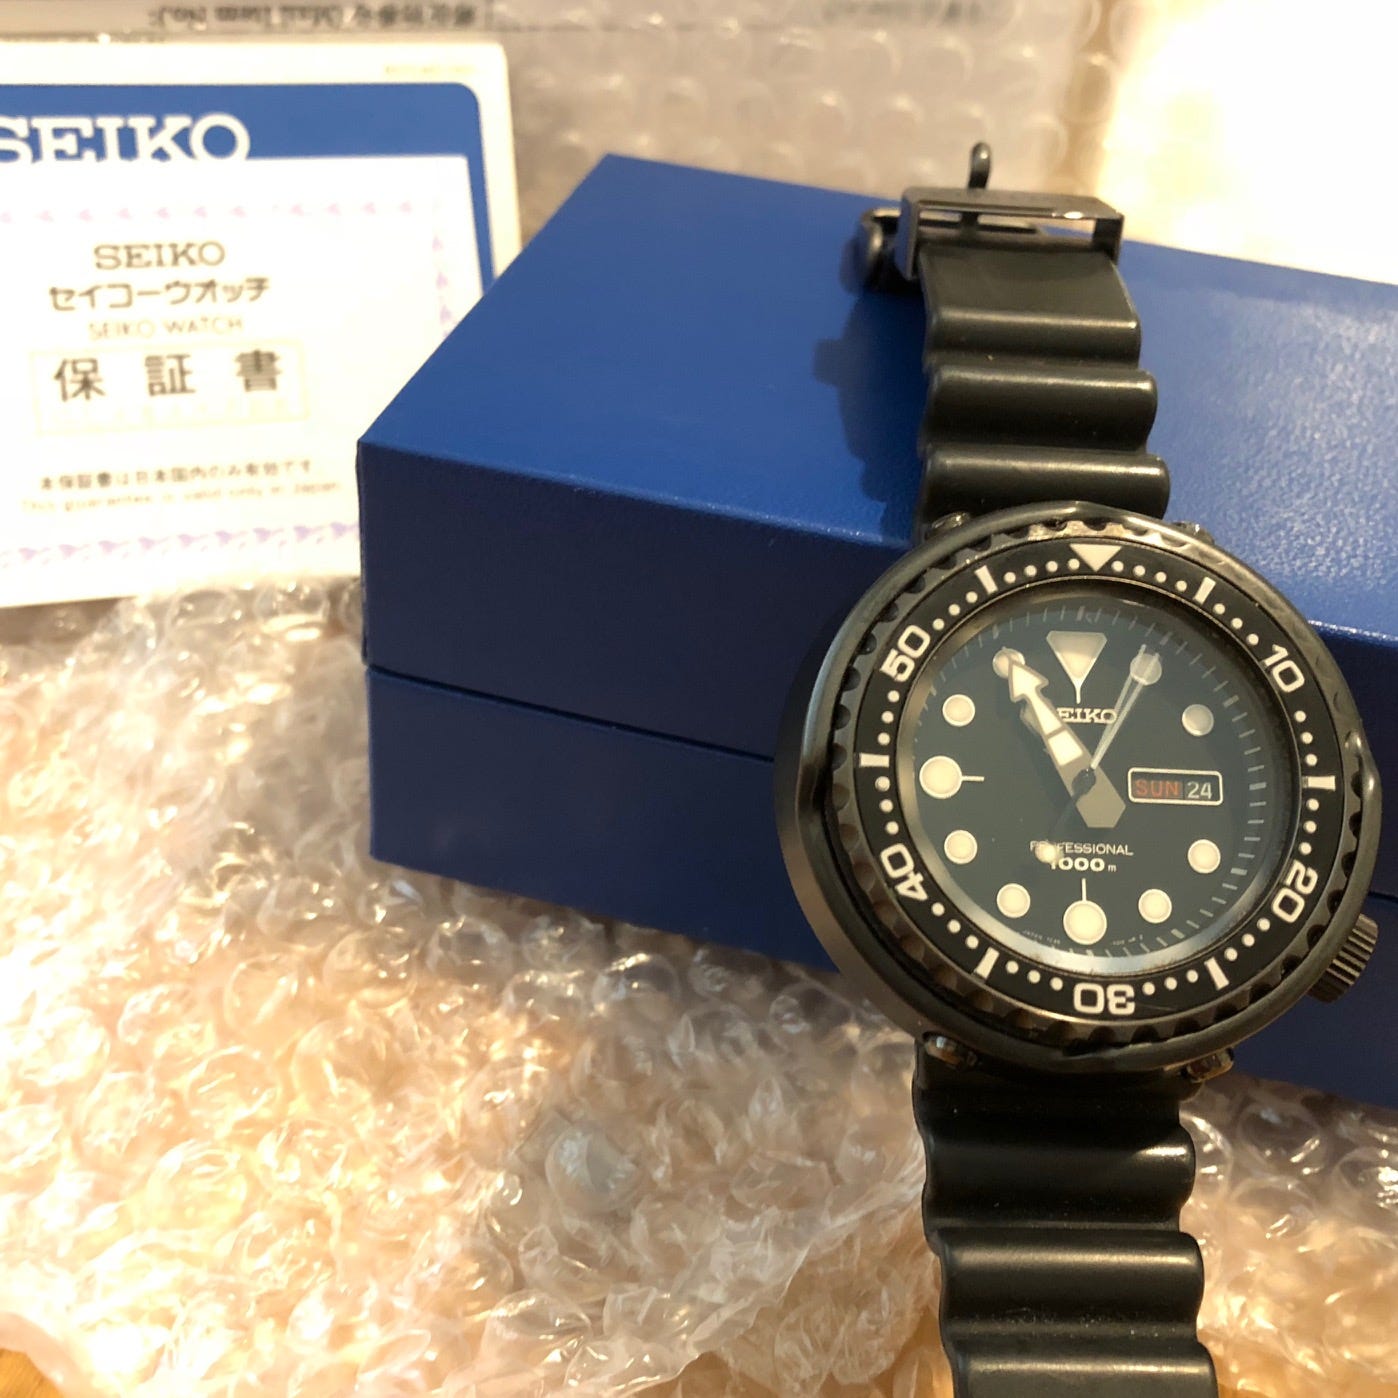 Seiko Dive Watch Repair Hot Sale, UP TO 61% OFF | www.editorialelpirata.com